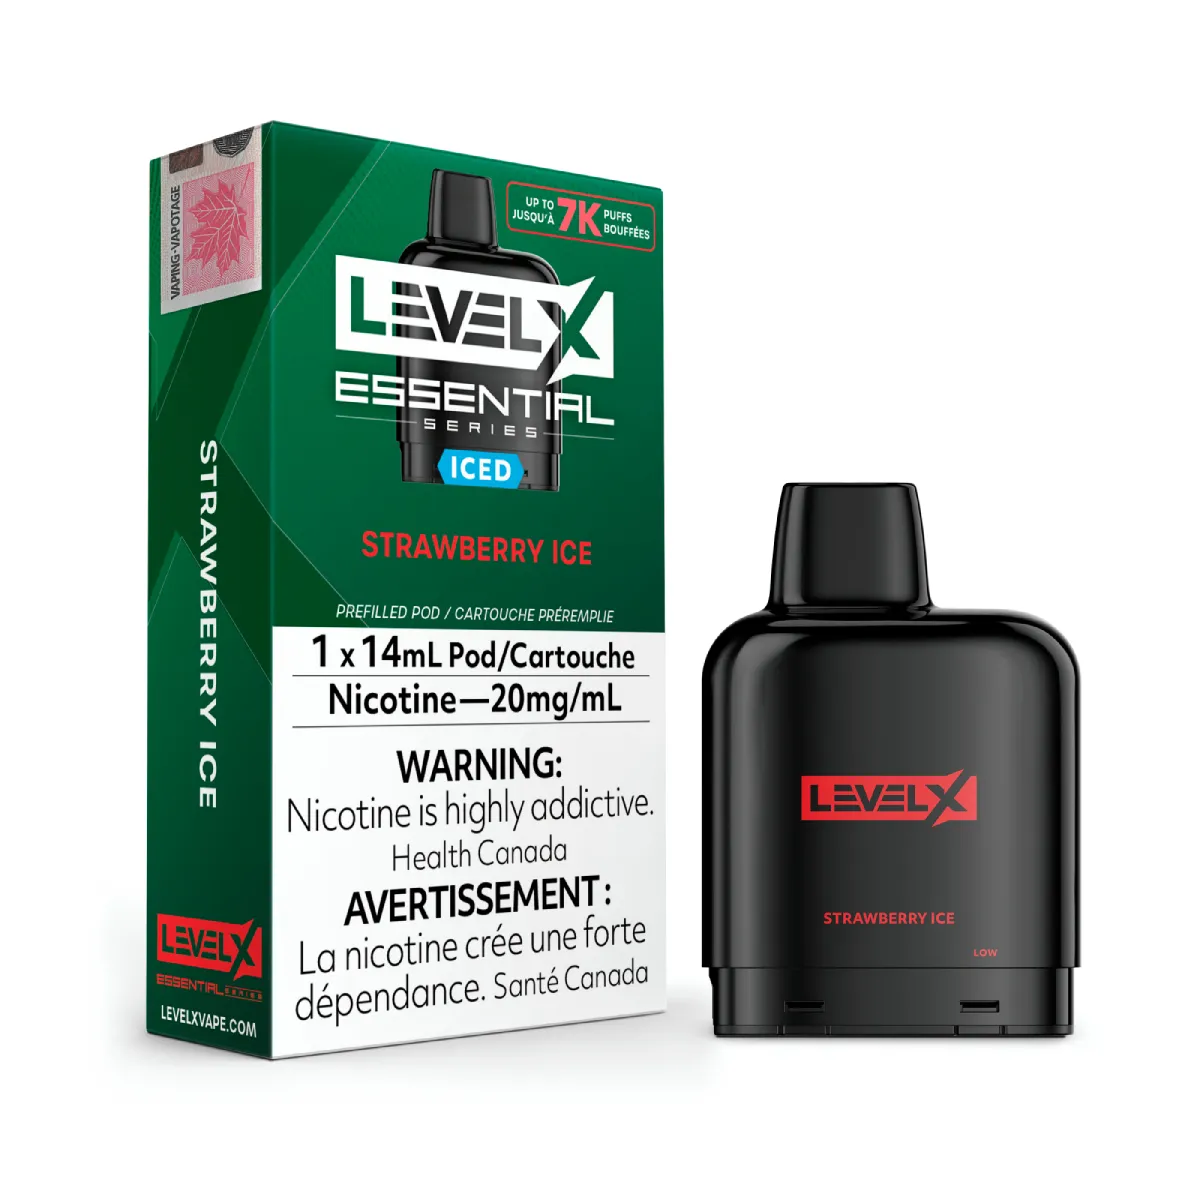 Level X Essential - Strawberry Ice (14mL) (6921450750007)